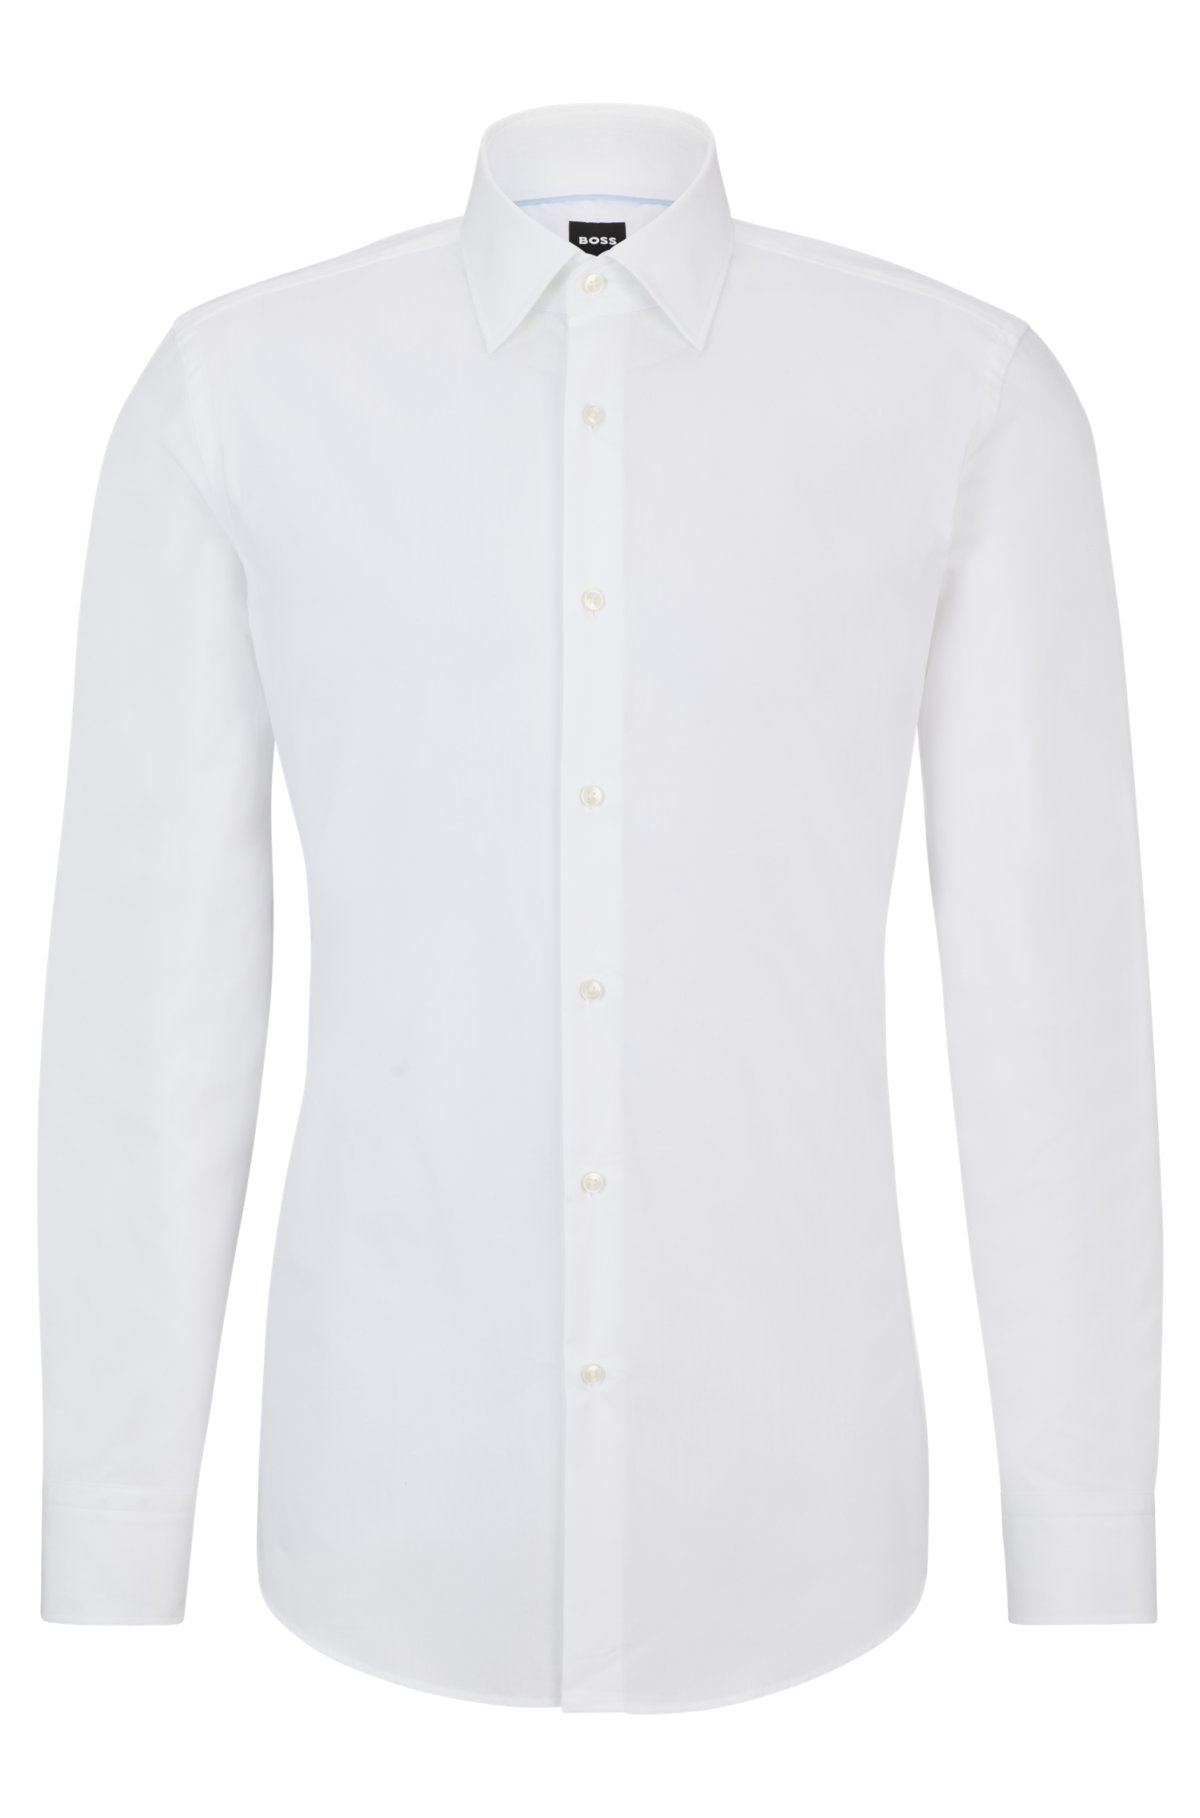 Slim-fit shirt in easy-iron cotton poplin, White